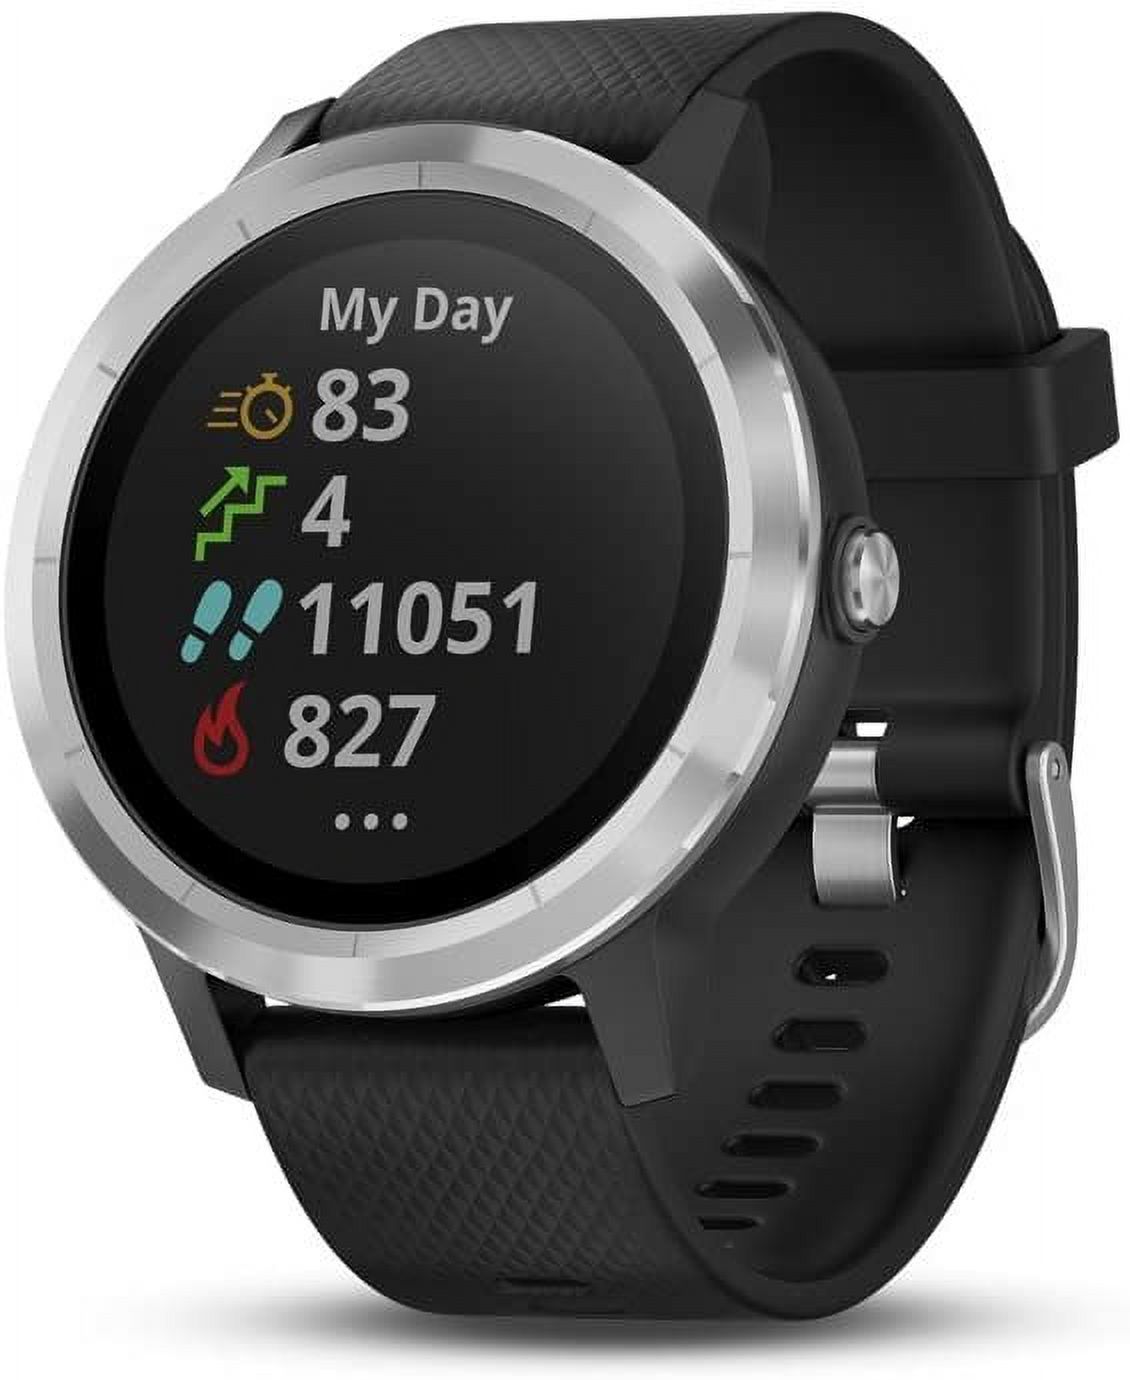 Garmin Vívoactive 3 Smartwatch Activity Fitness Tracker Watch, Black w/ Silver - image 1 of 13